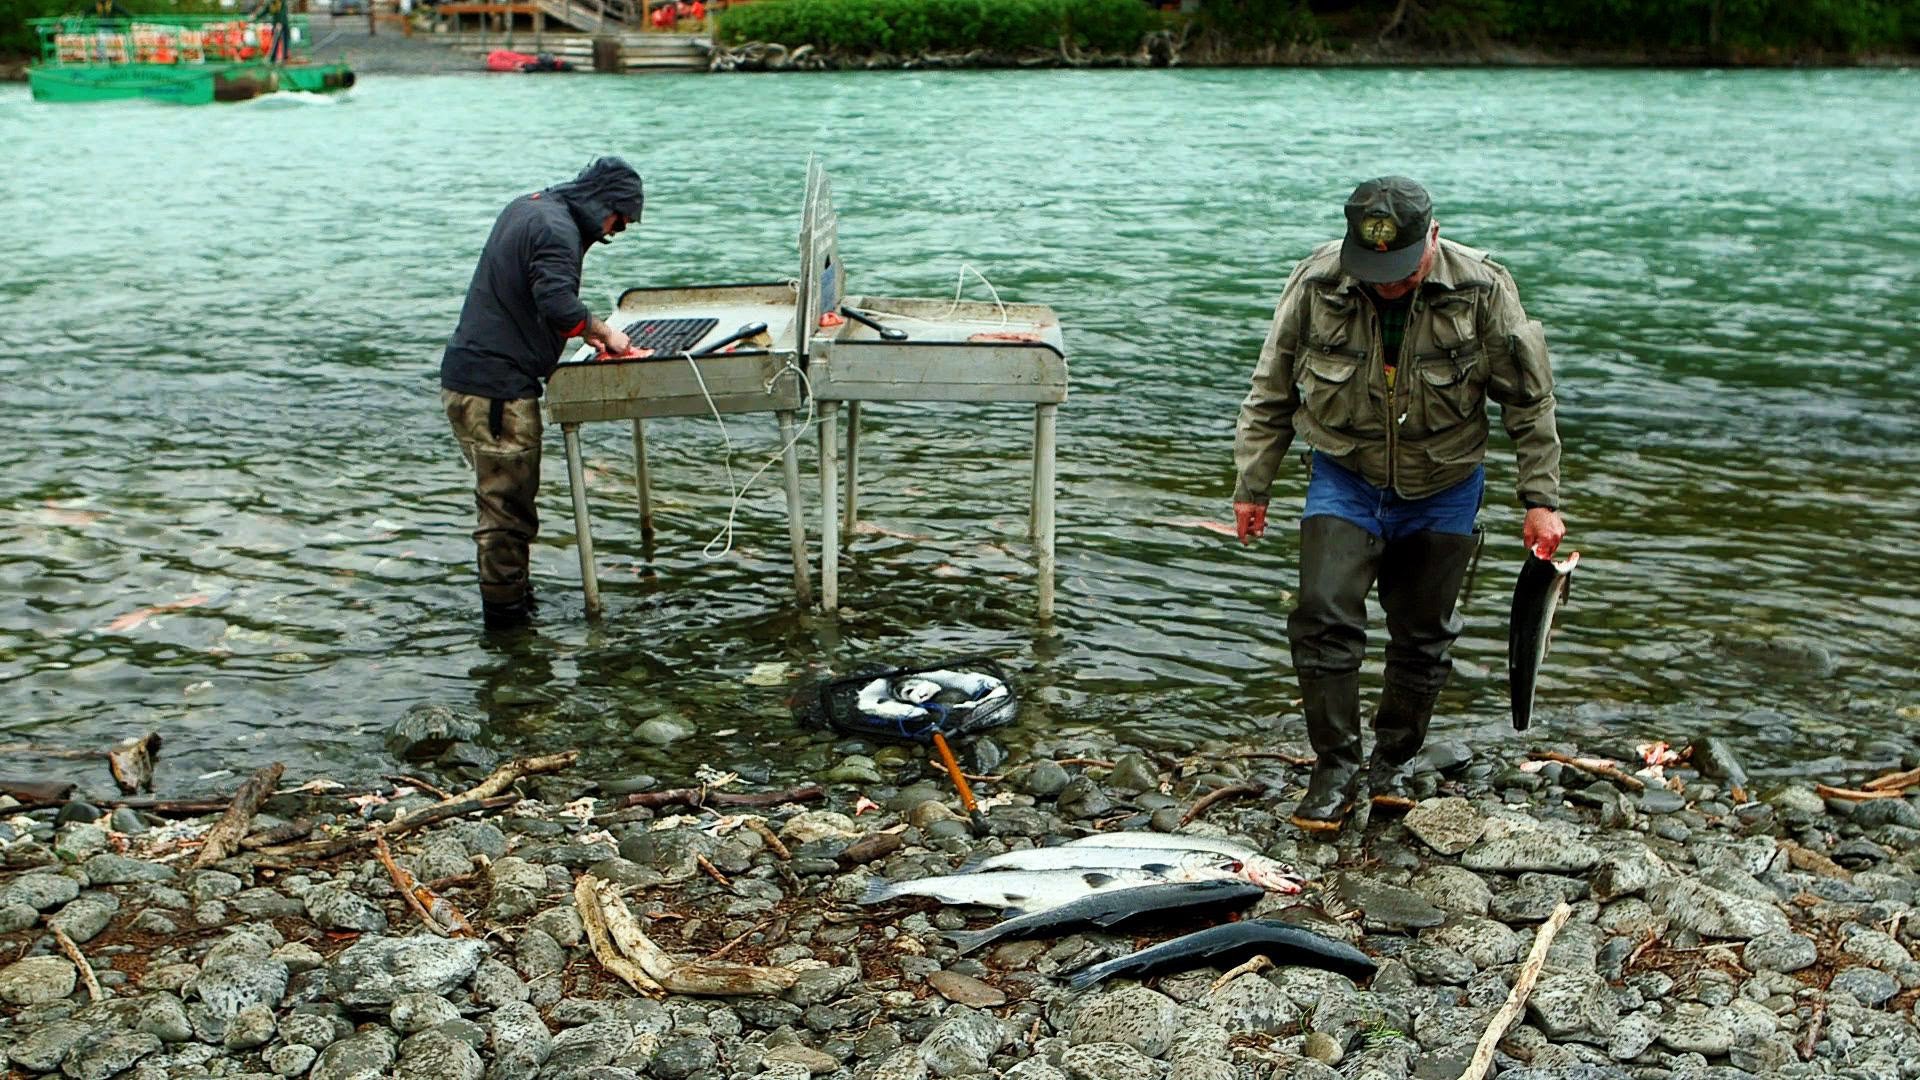 Combat fishing on Alaska’s Kenai Peninsula